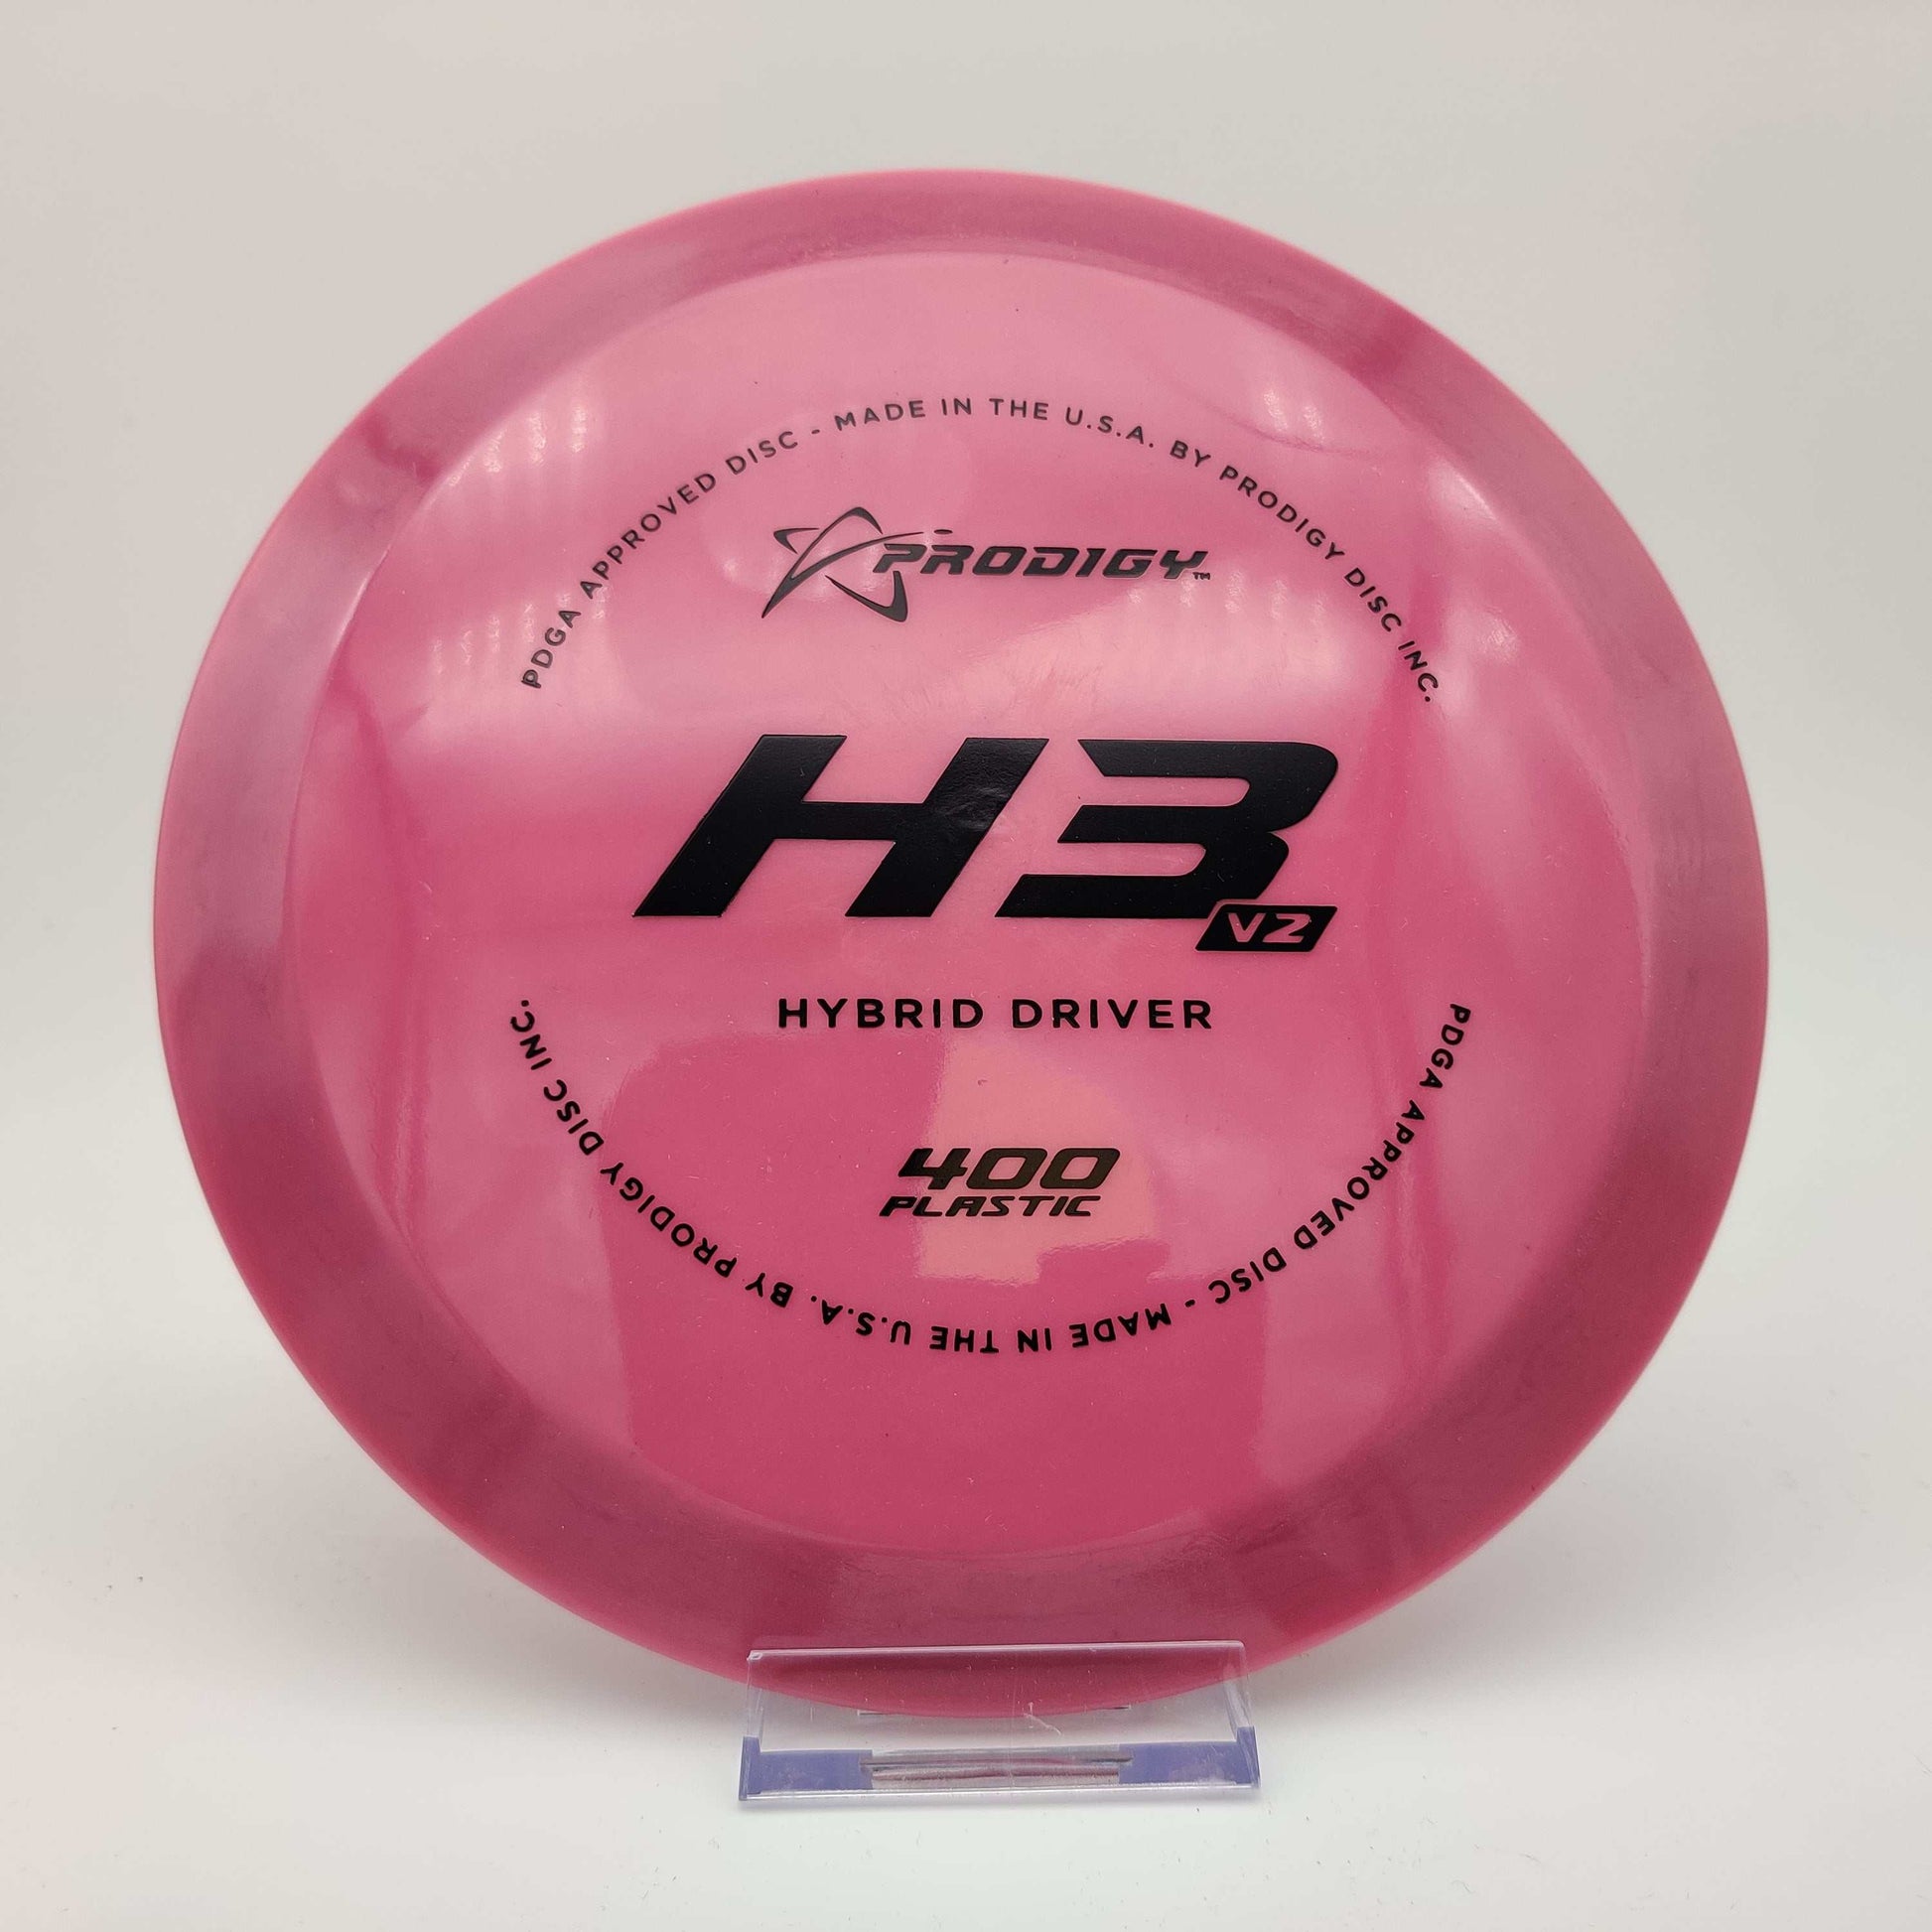 Prodigy 400 H3V2 - Disc Golf Deals USA